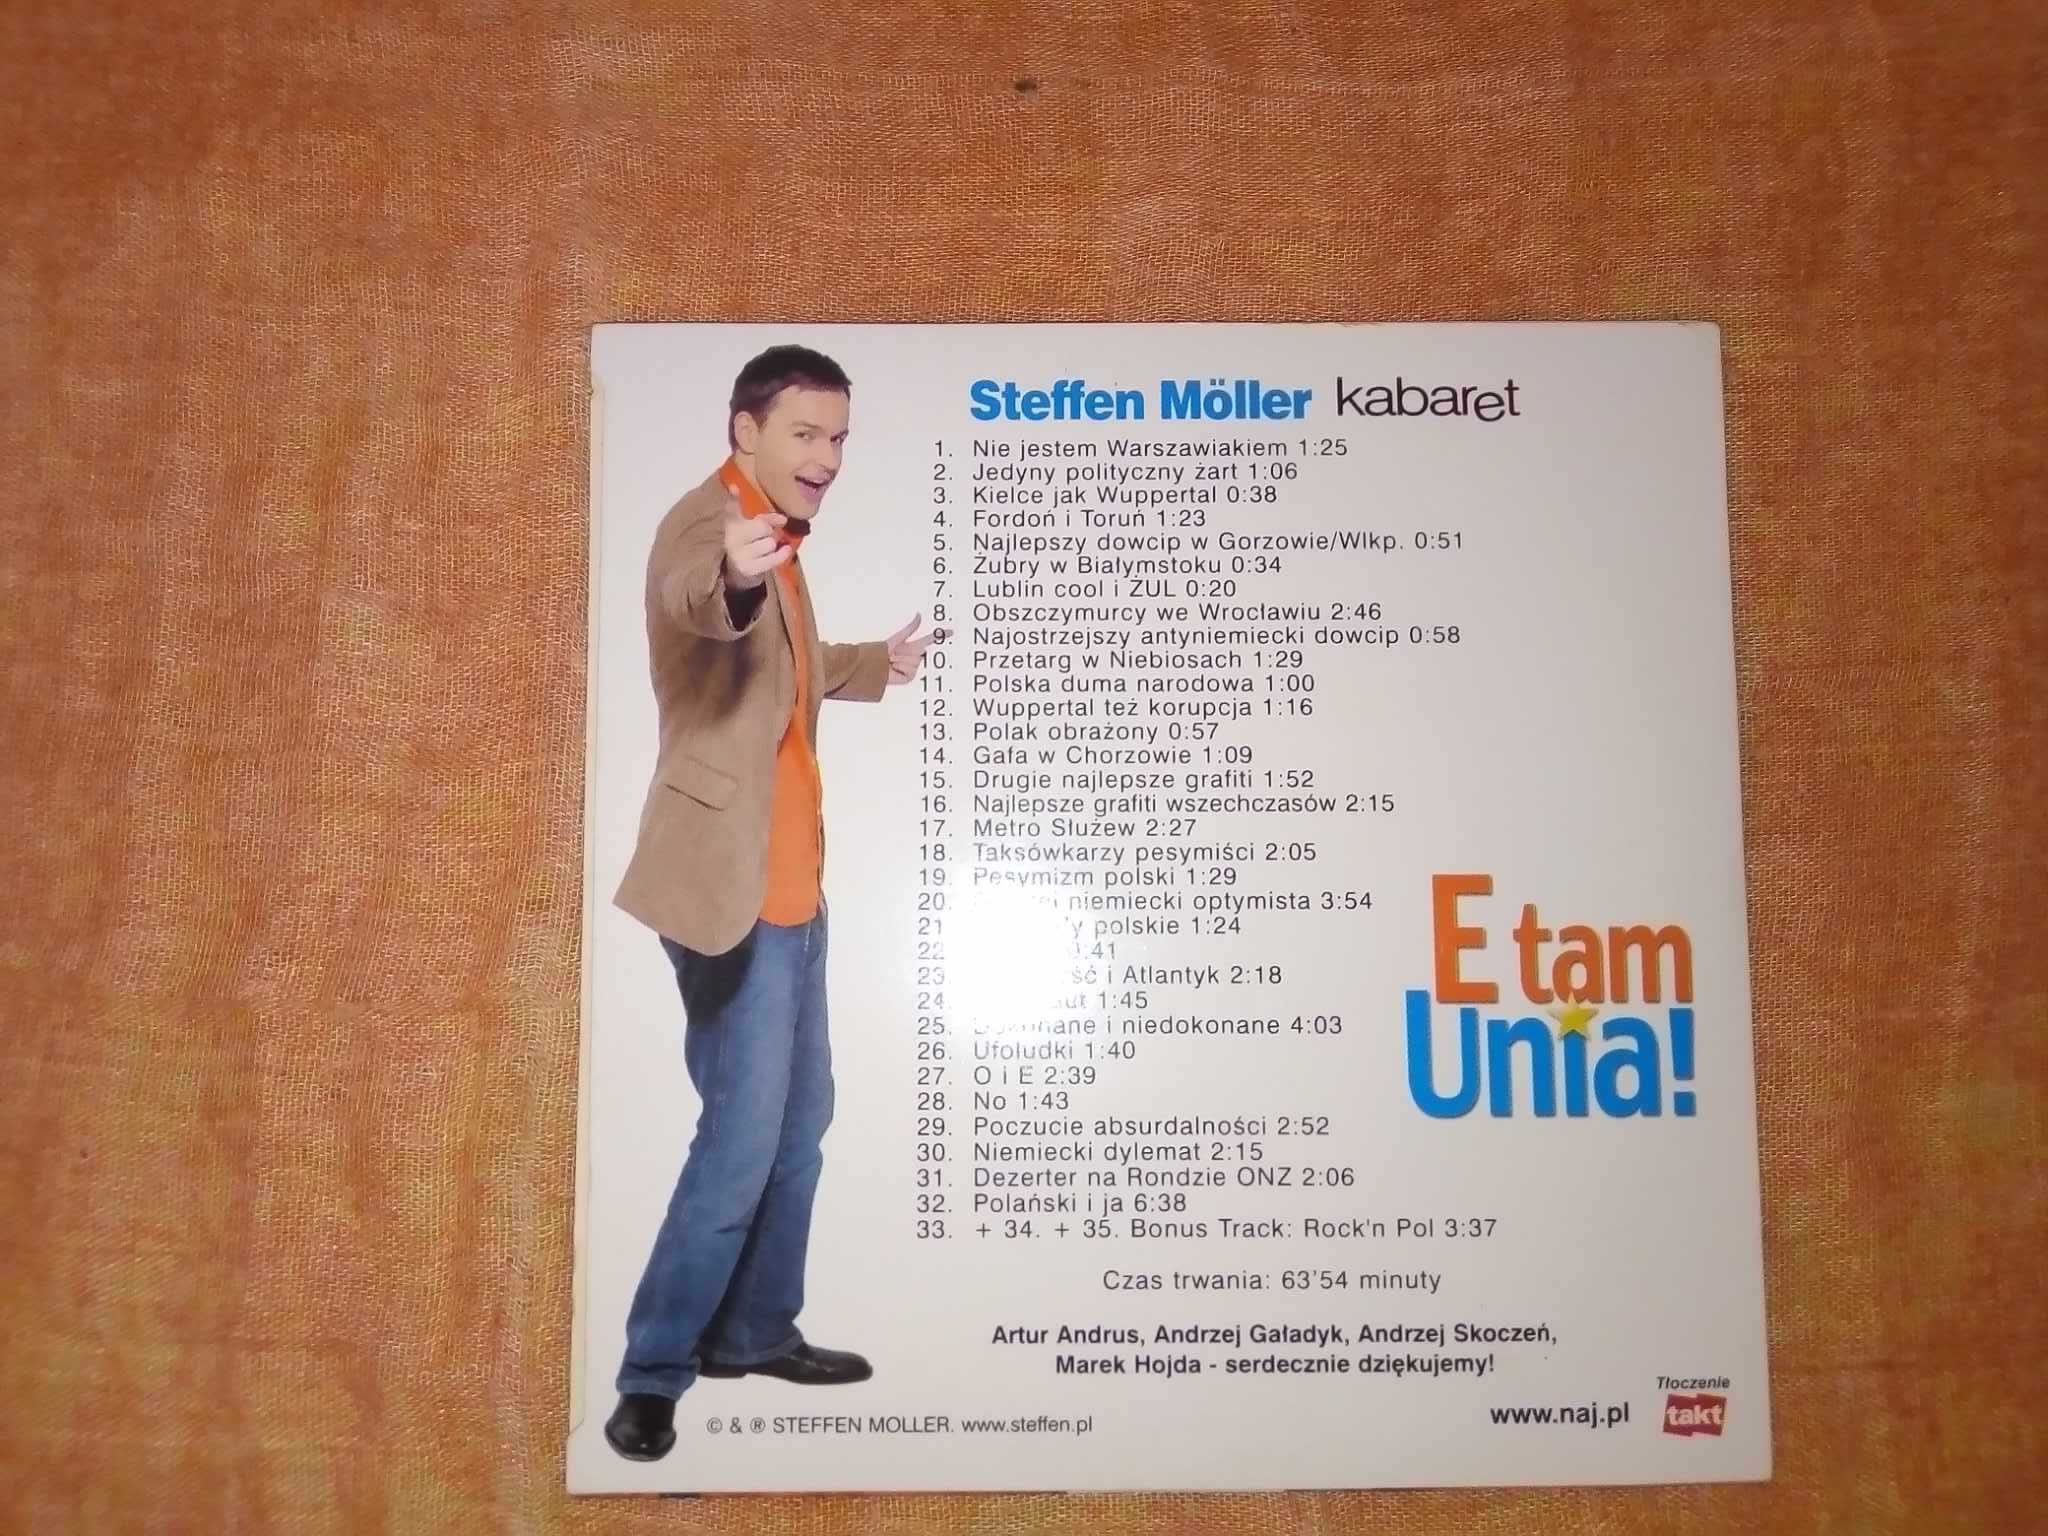 Steffen Moller kabaret E tam Unia! płyta kompaktowa CD 2004 oryginał